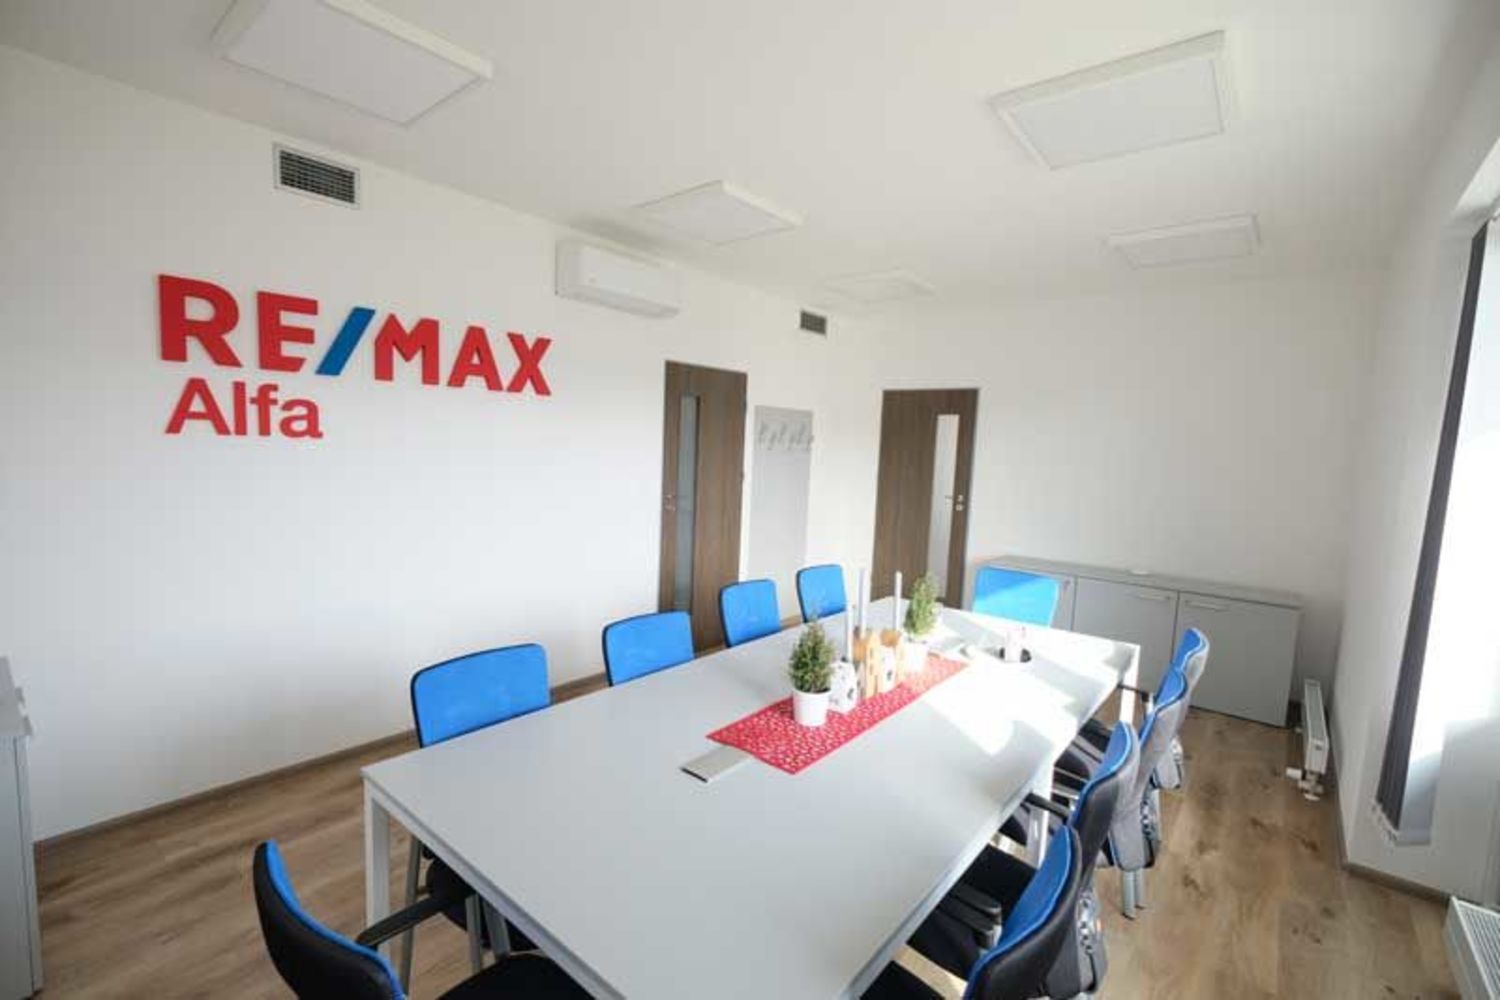 Realitní kancelář RE/MAX Alfa 2 -, Brno